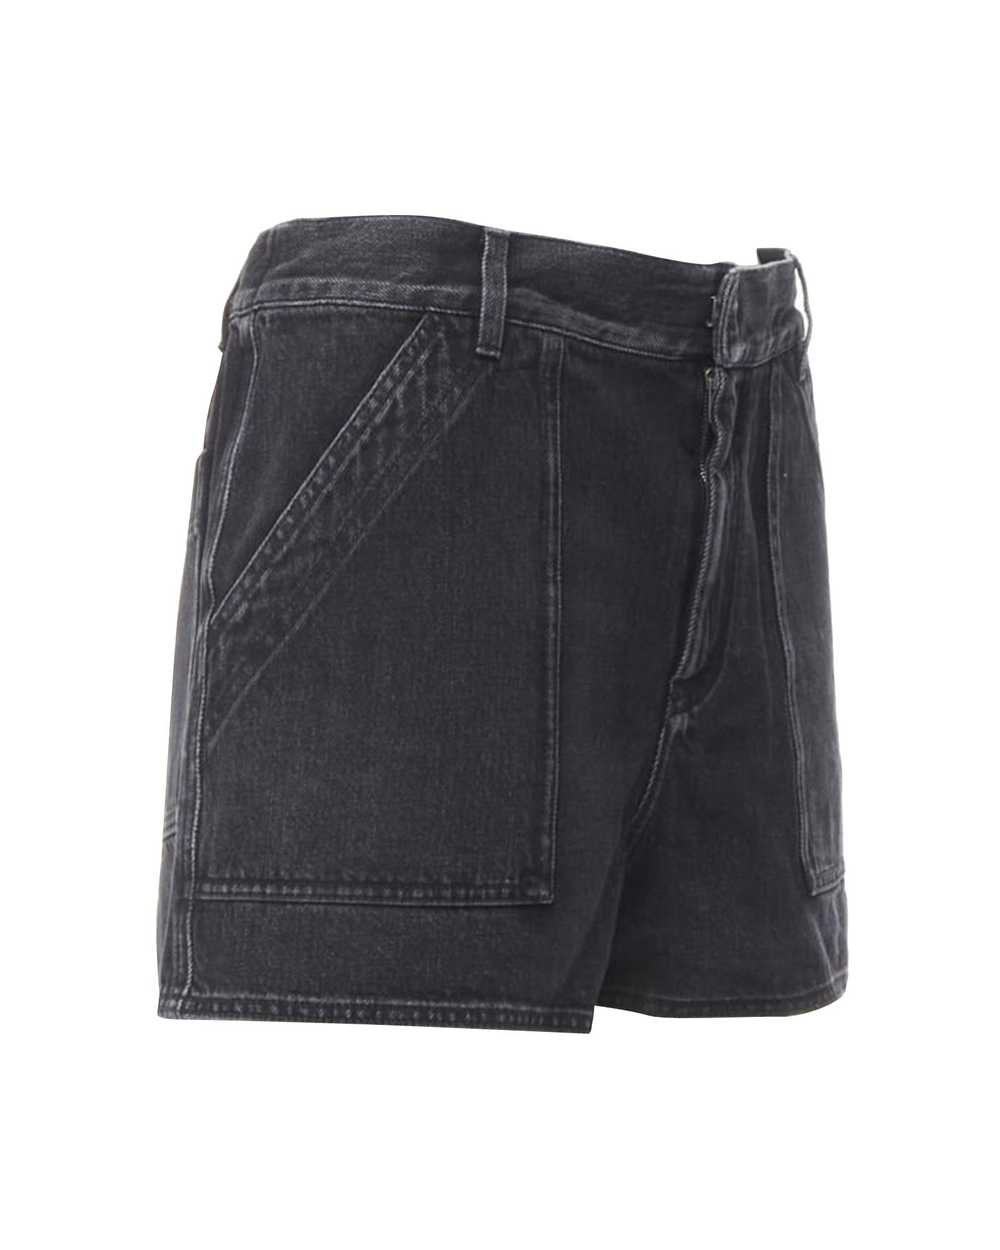 Product Details Dior Denim Cargo Shorts - image 3